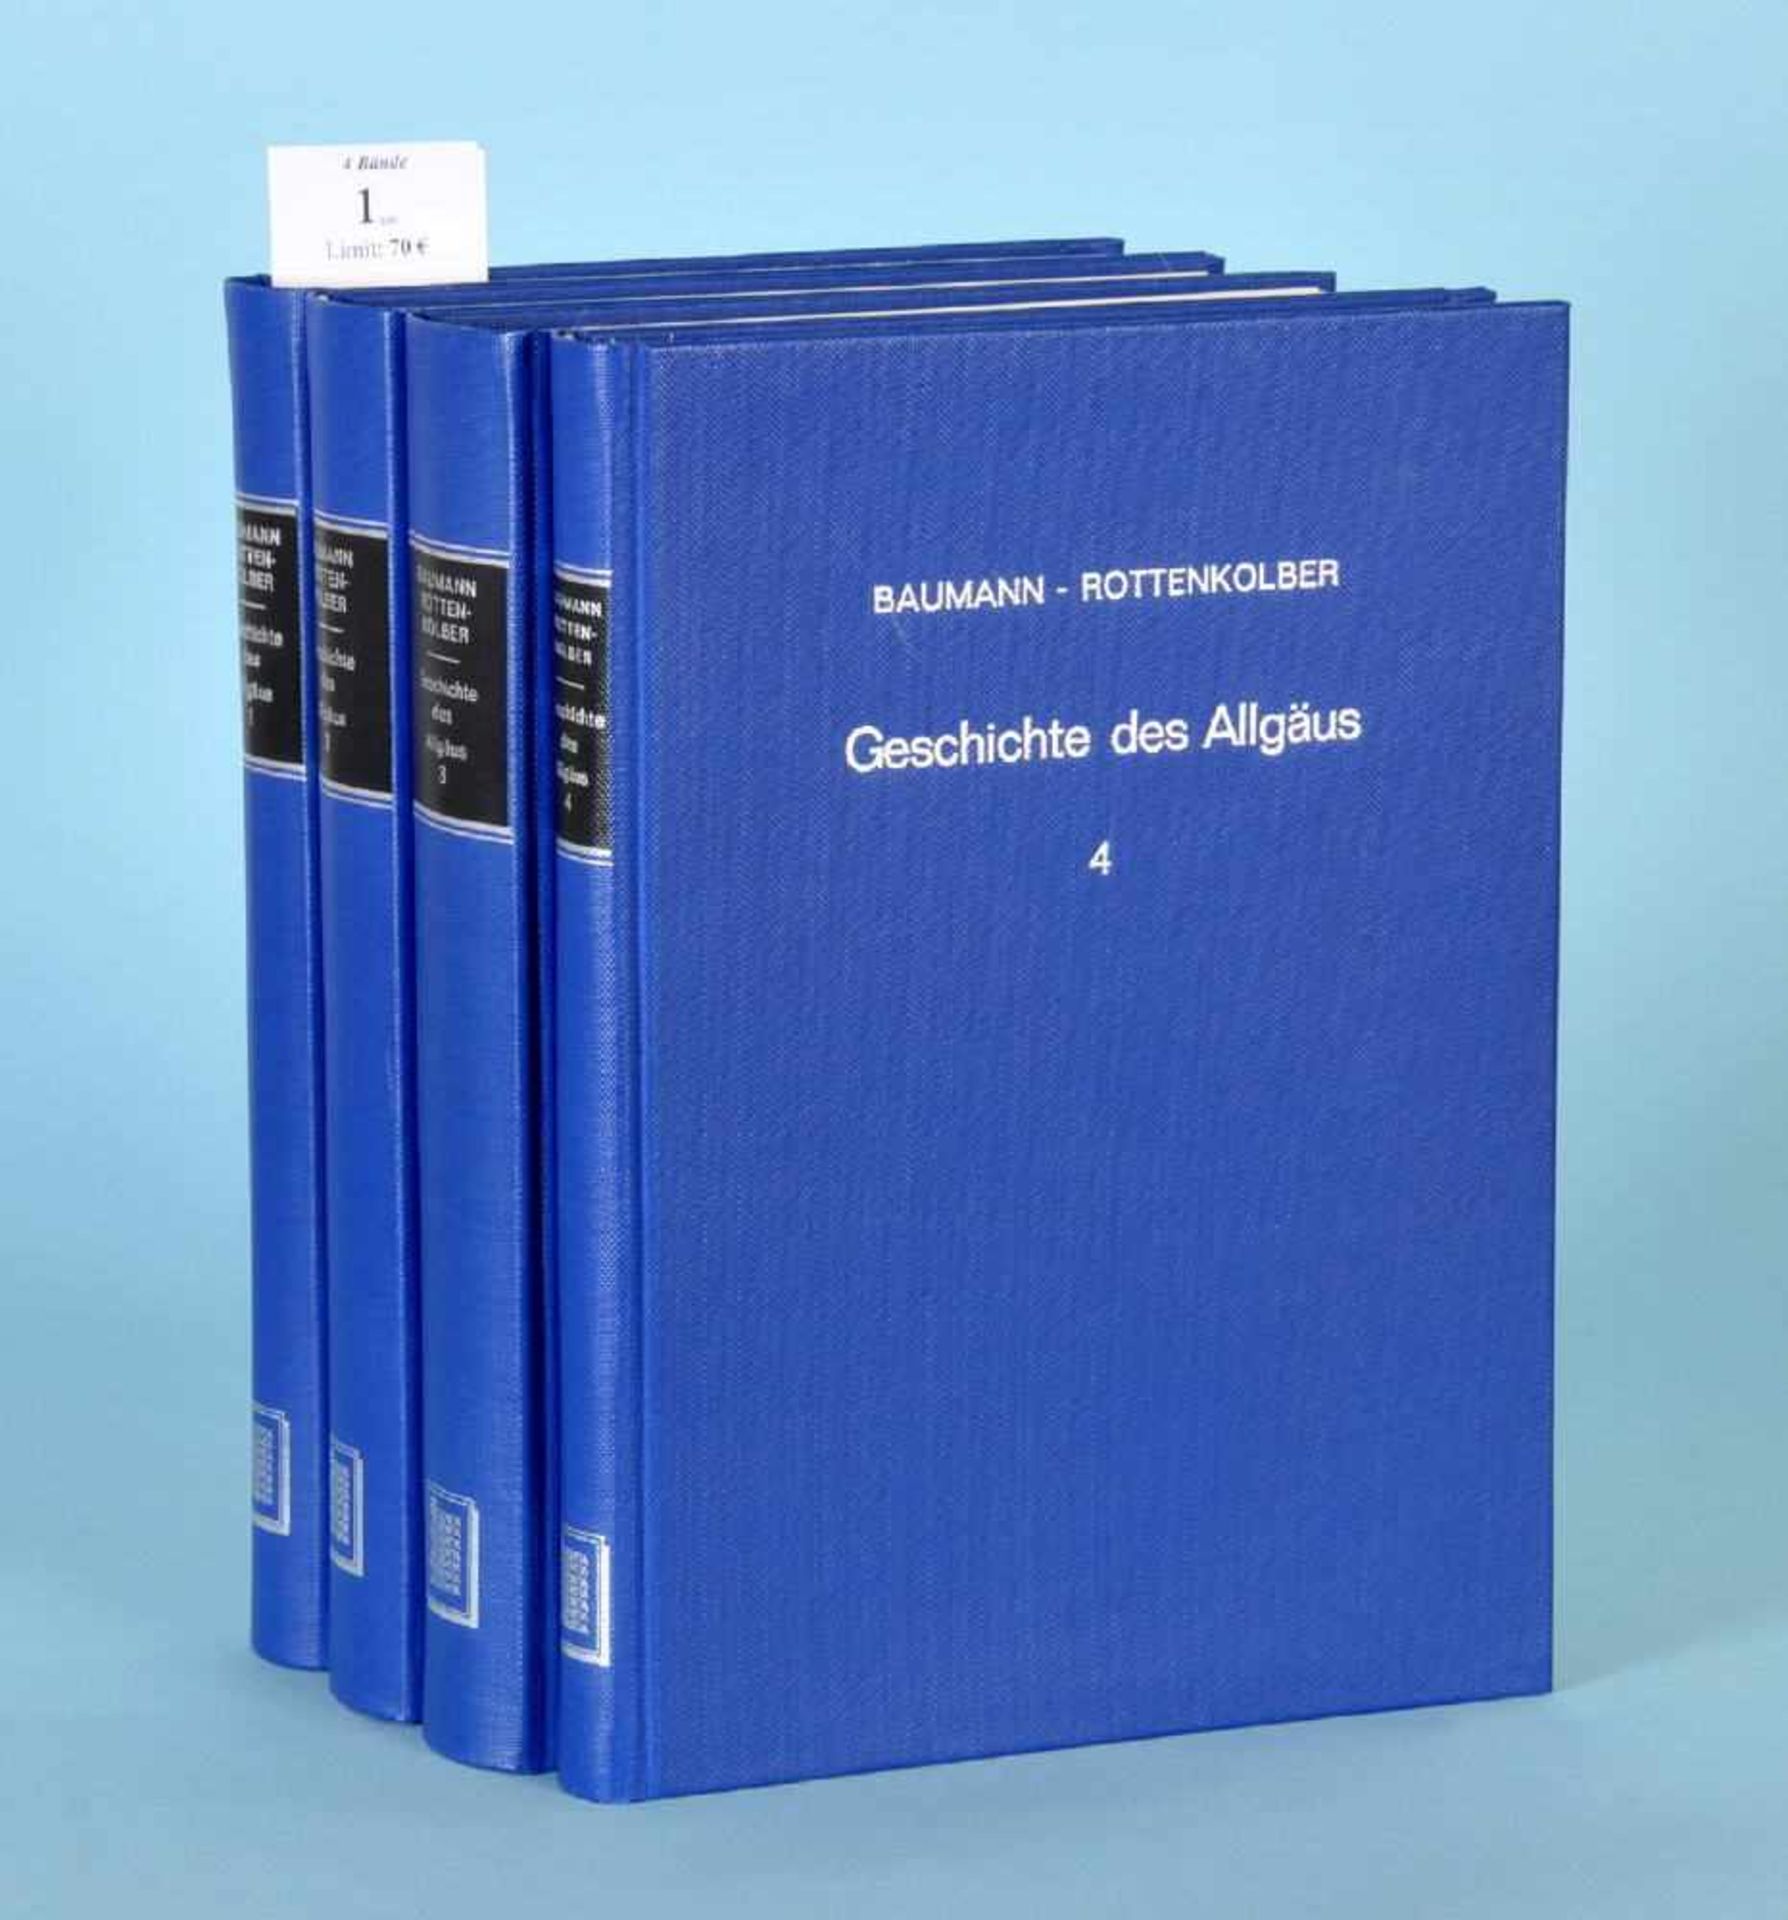 Baumann, F. u. Rottenkolber, J. "Geschichte des Allgäus"4 Bände, zahlr., teilw. farb. Abb., Scientia